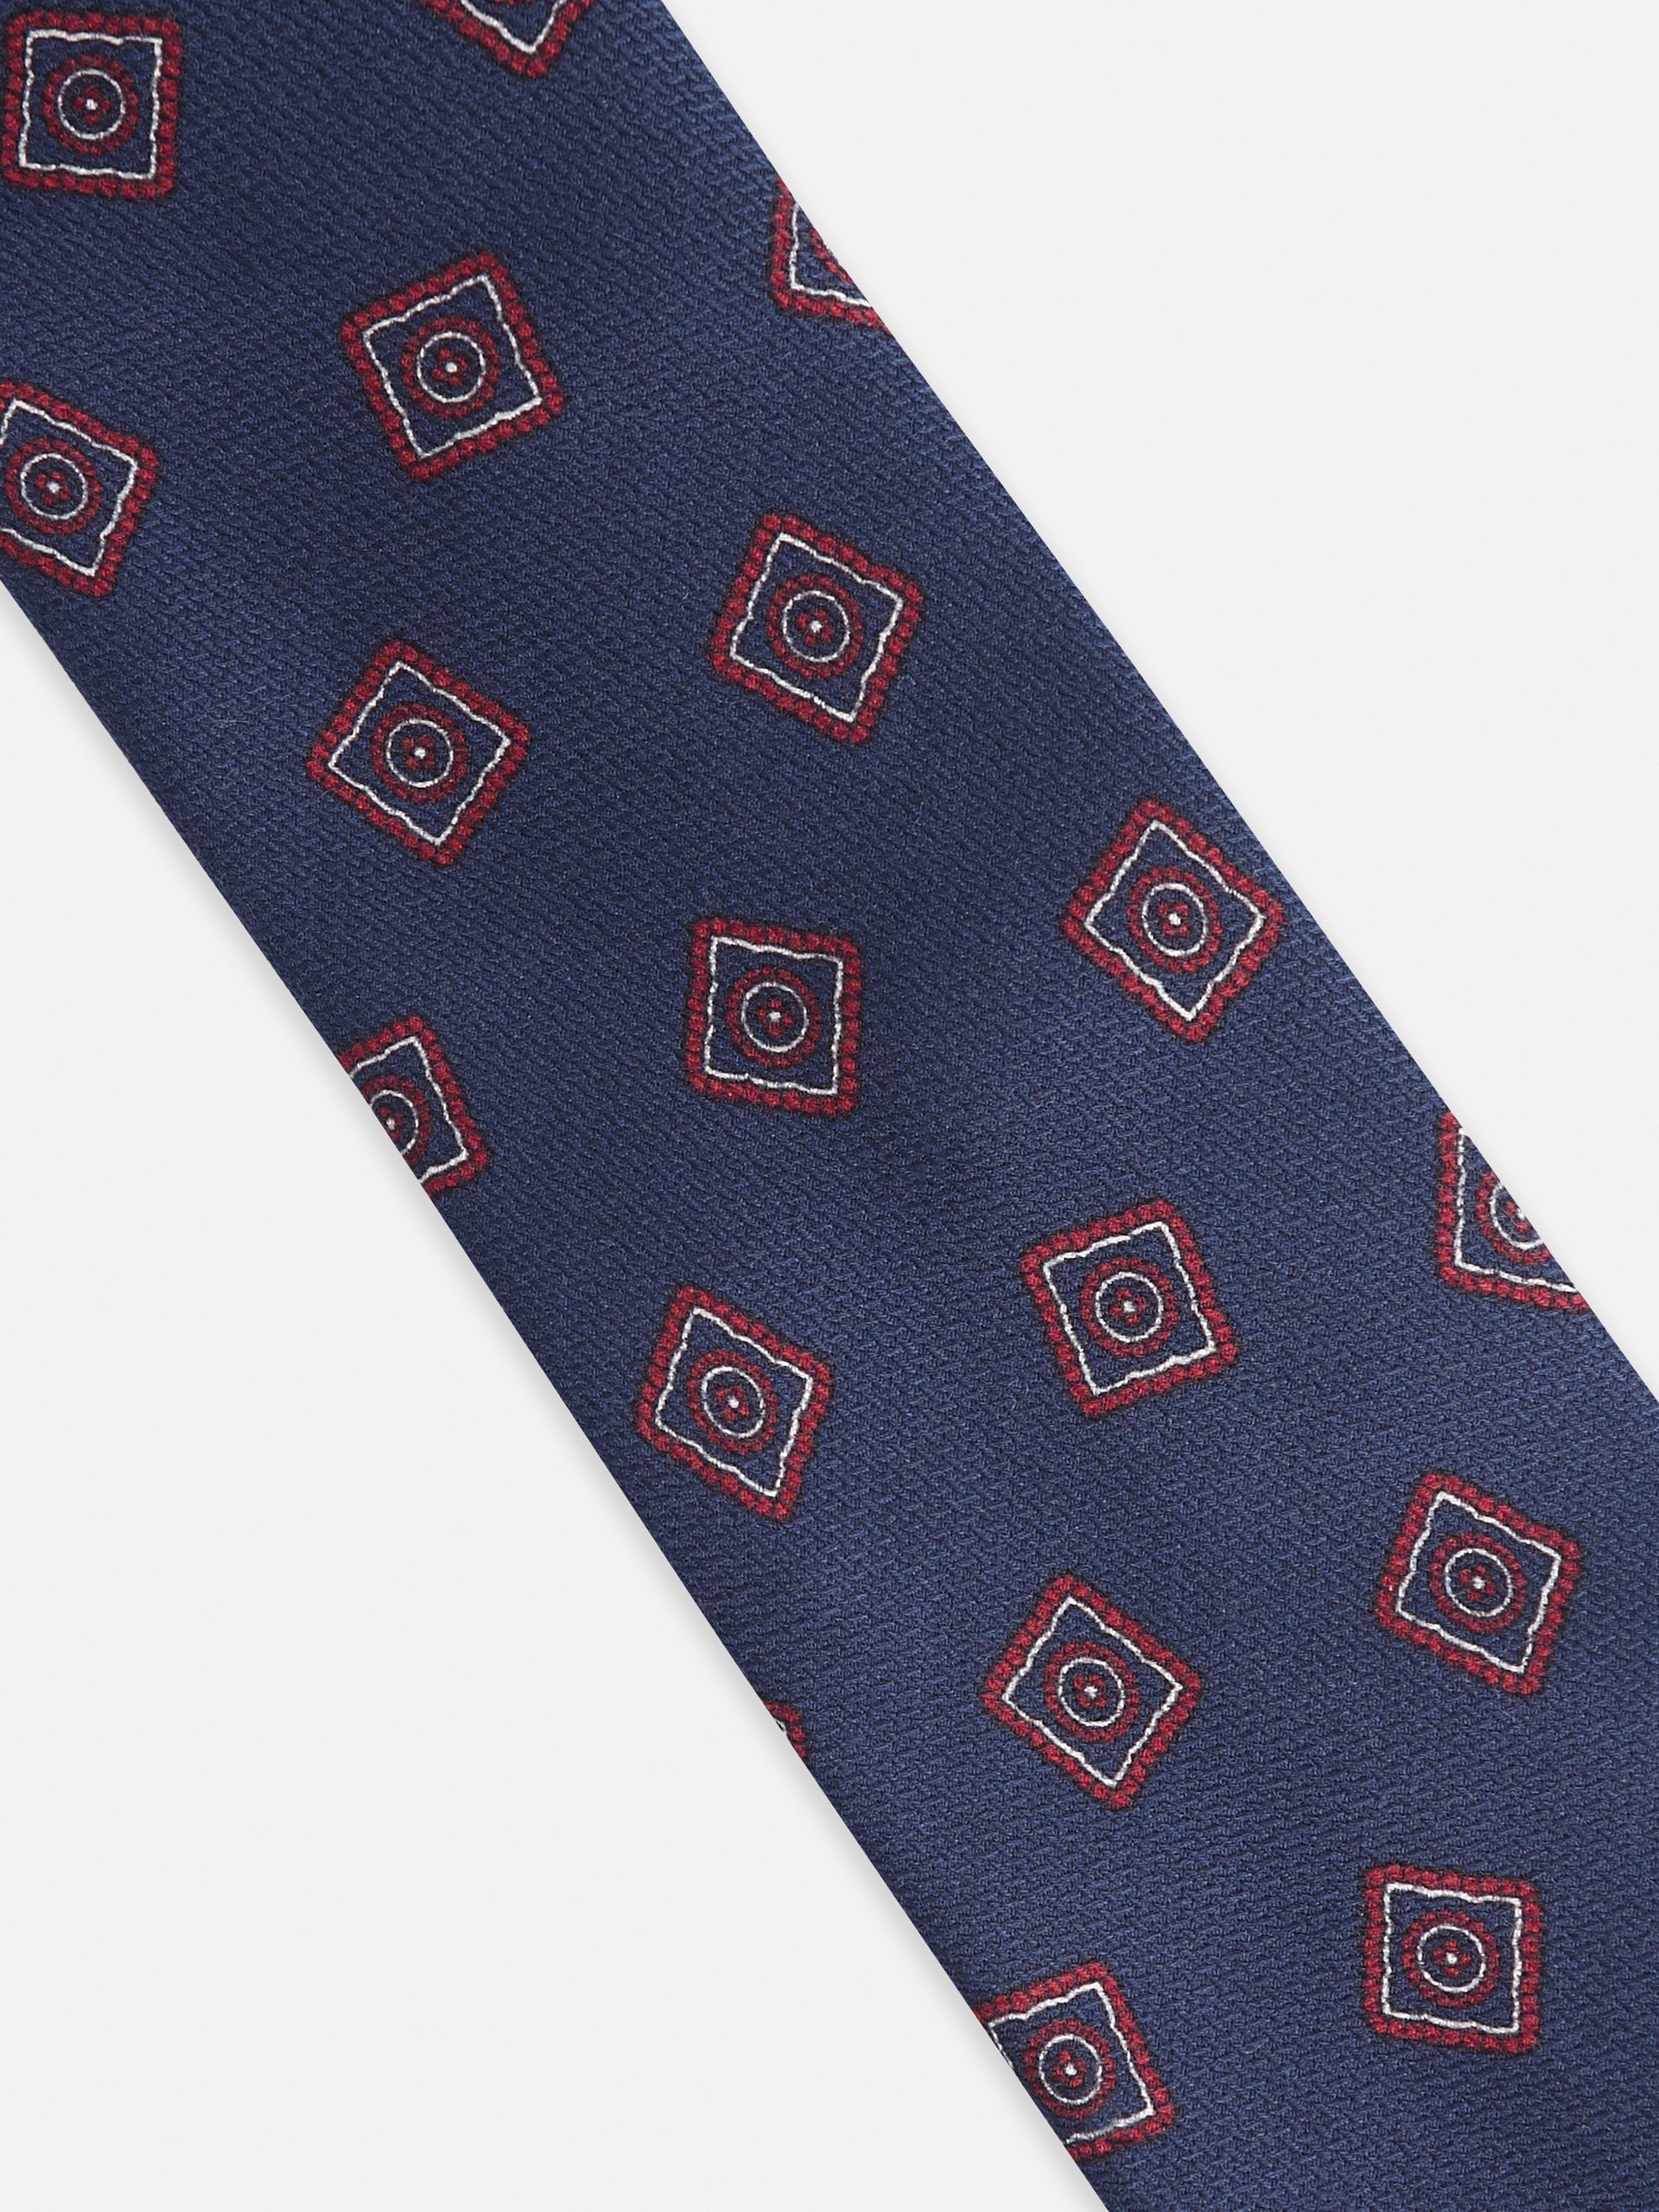 Cravate bleu marine imprimé irrégulier